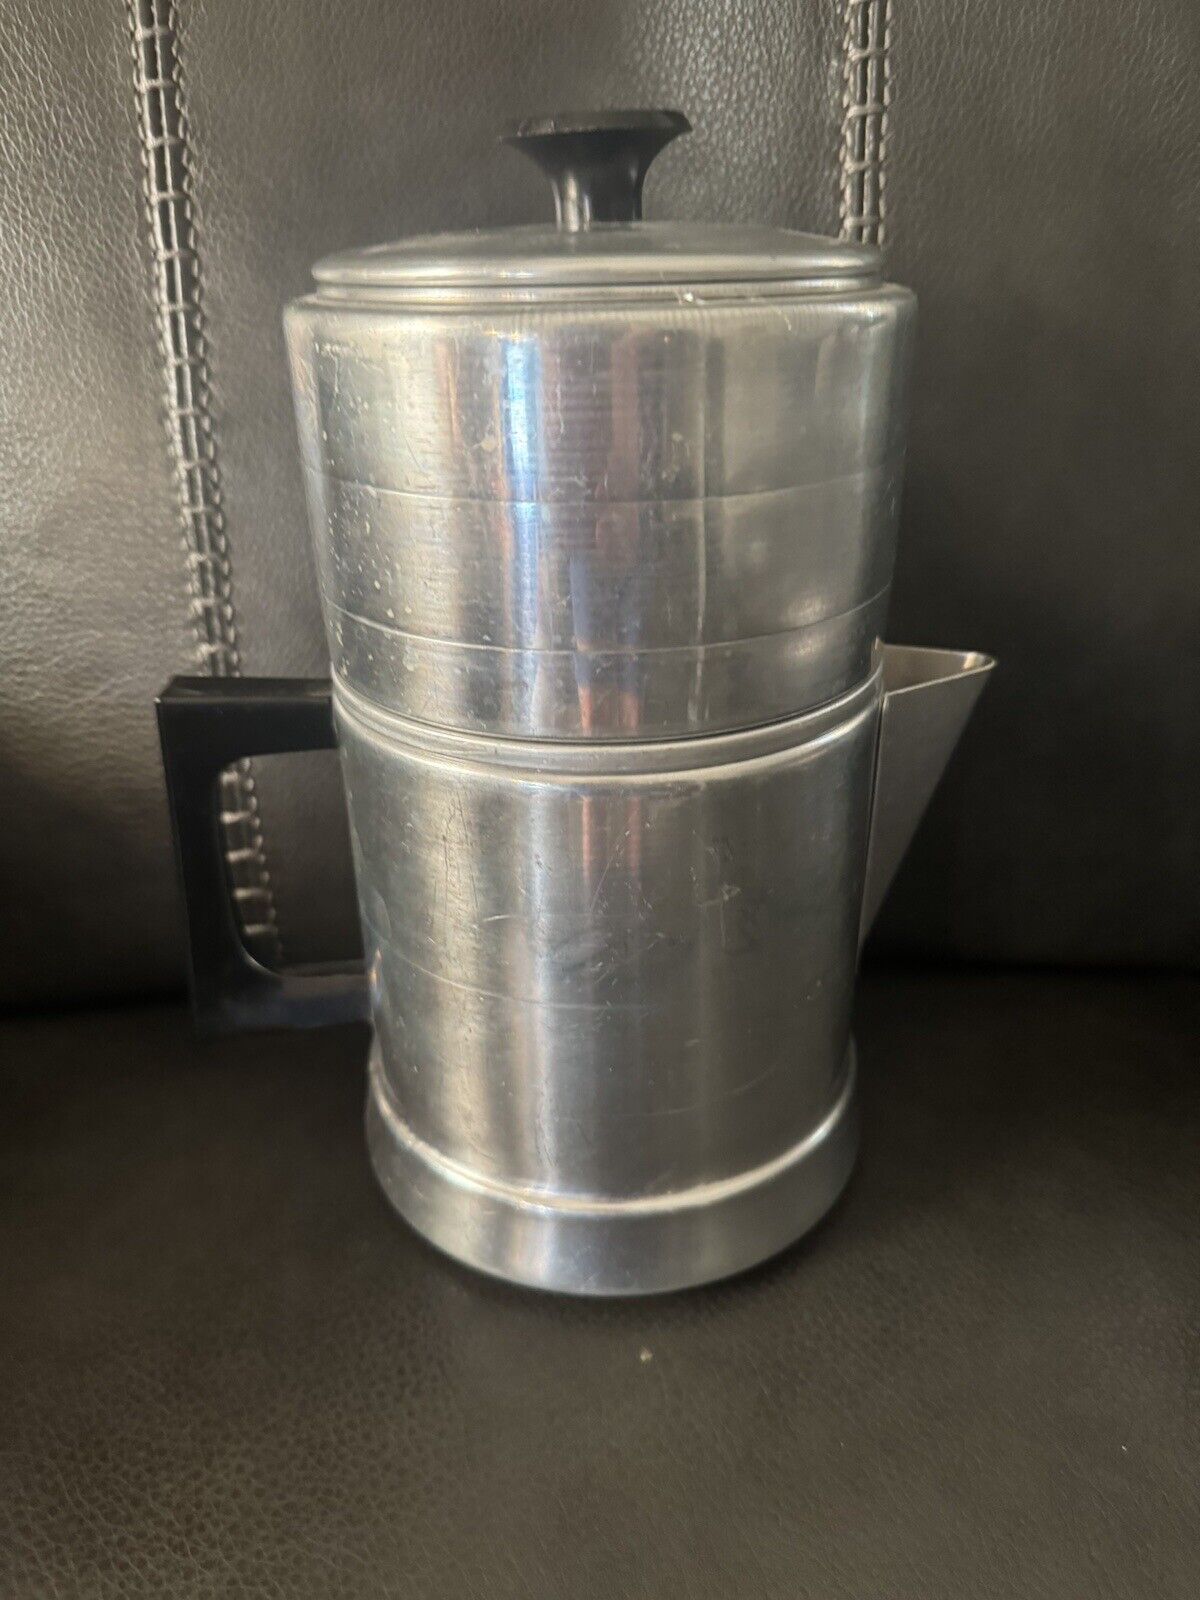 Vintage Comet Drip Maker Coffee Pot Aluminum 7 Cup Camping Stove Top USA